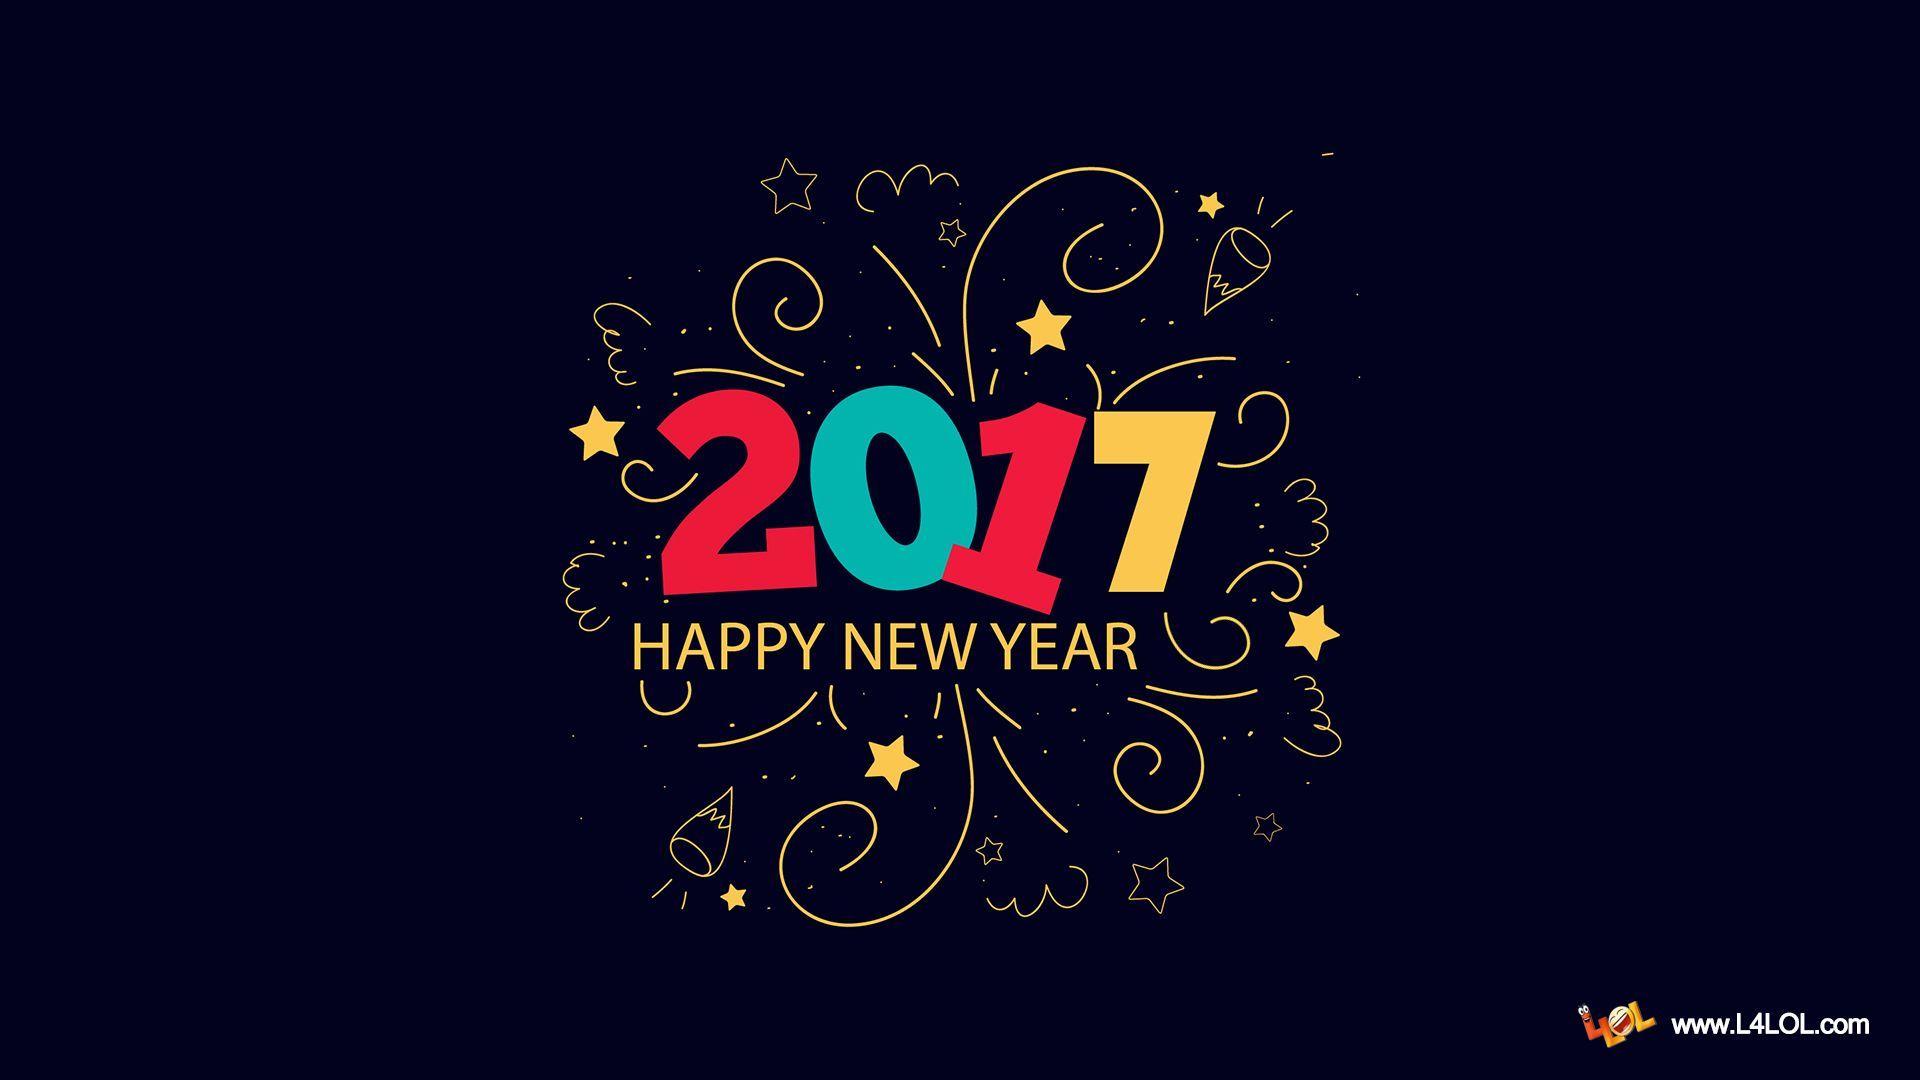 Happy New Year HD Pics and Photo 2017 Free Downlaod